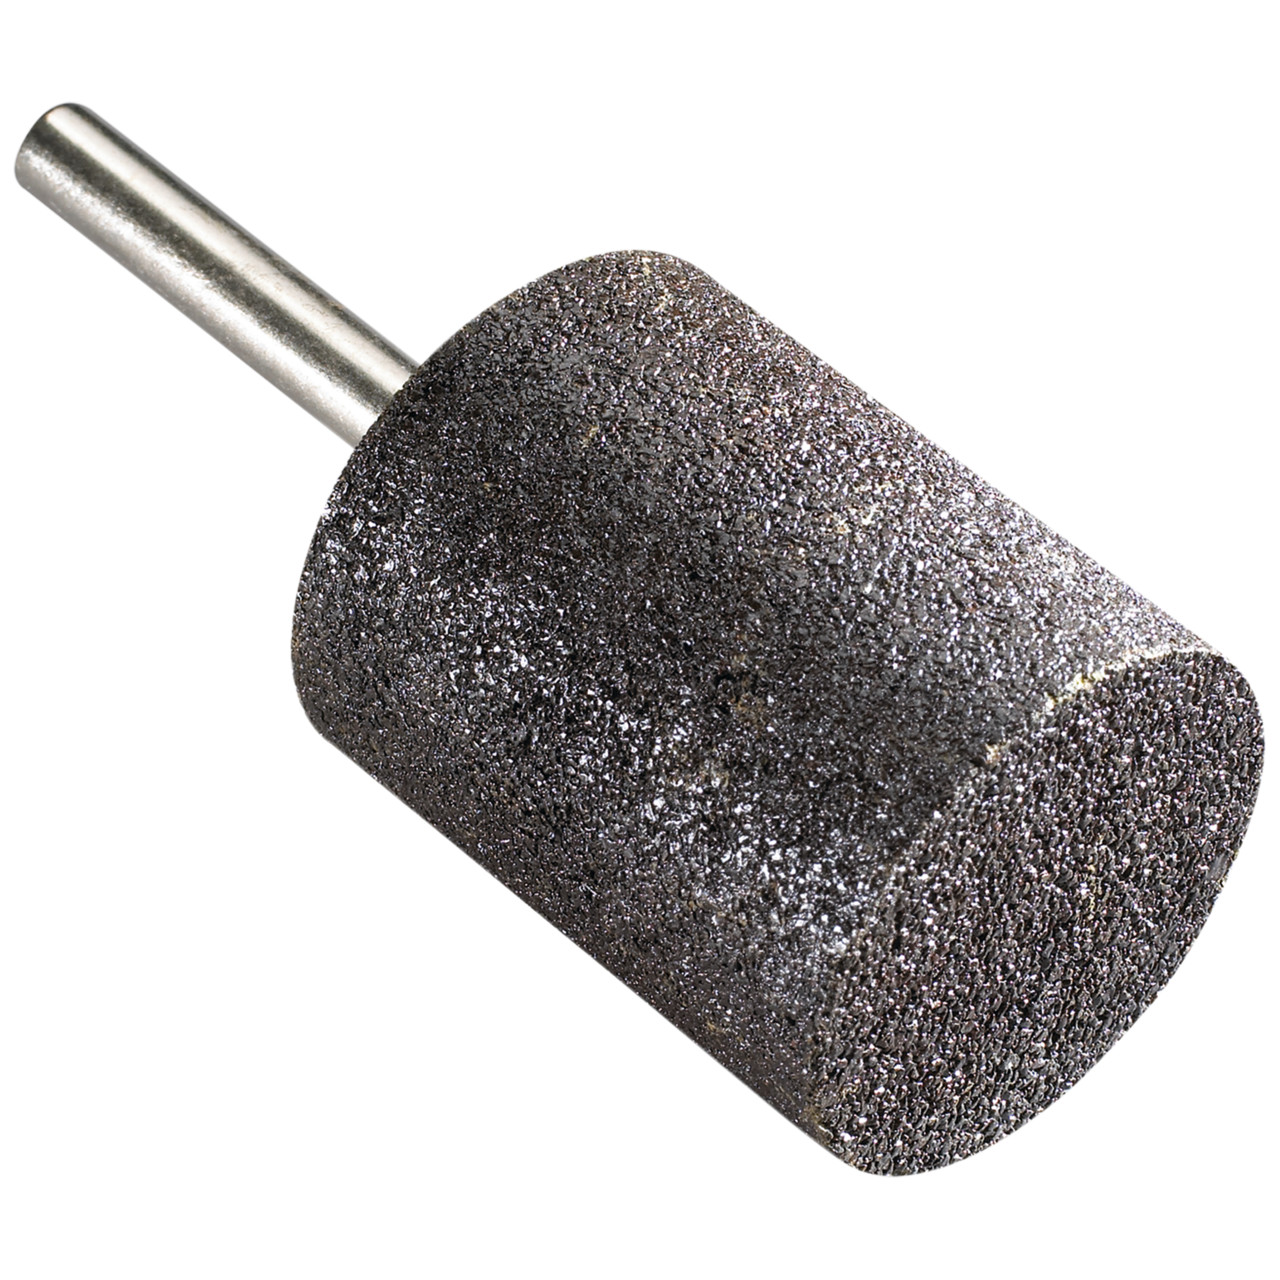 Tyrolit Punti montati in resina DxT-SxL 10x25-6x40 Per ghisa, forma: 52ZY - cilindro (punto montato), Art. 108261